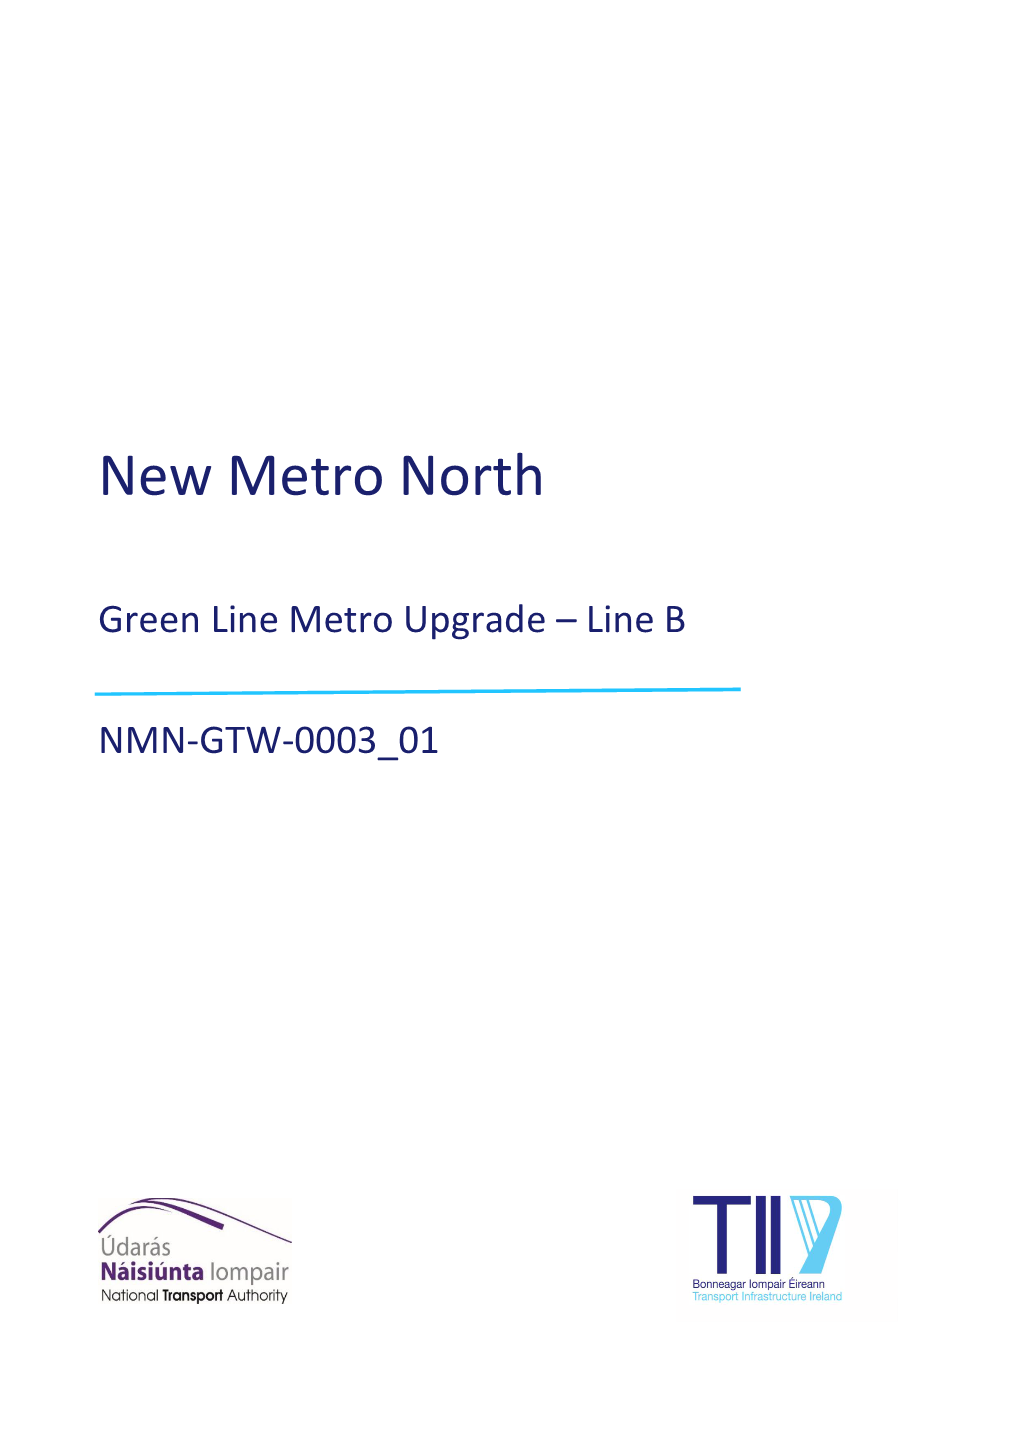 Green Line Metro Upgrade – Line B Filename